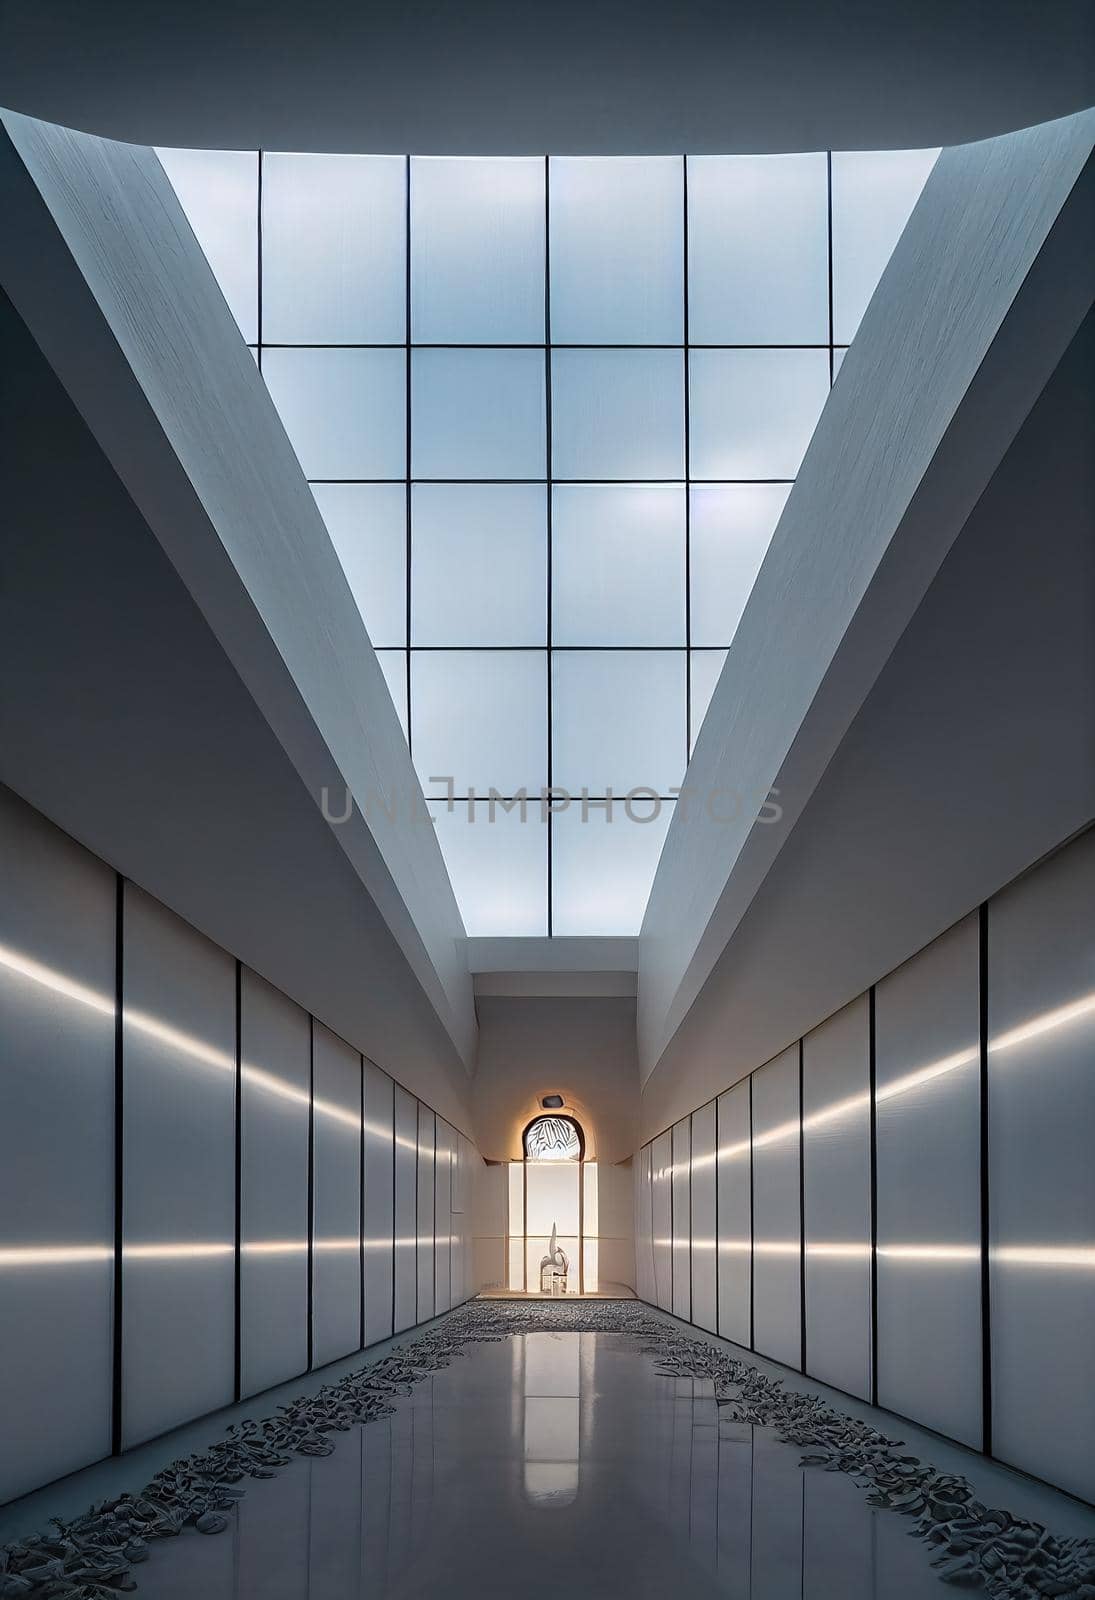 Interior shot of a modern contemporary futuristic chapel, 3d illustration